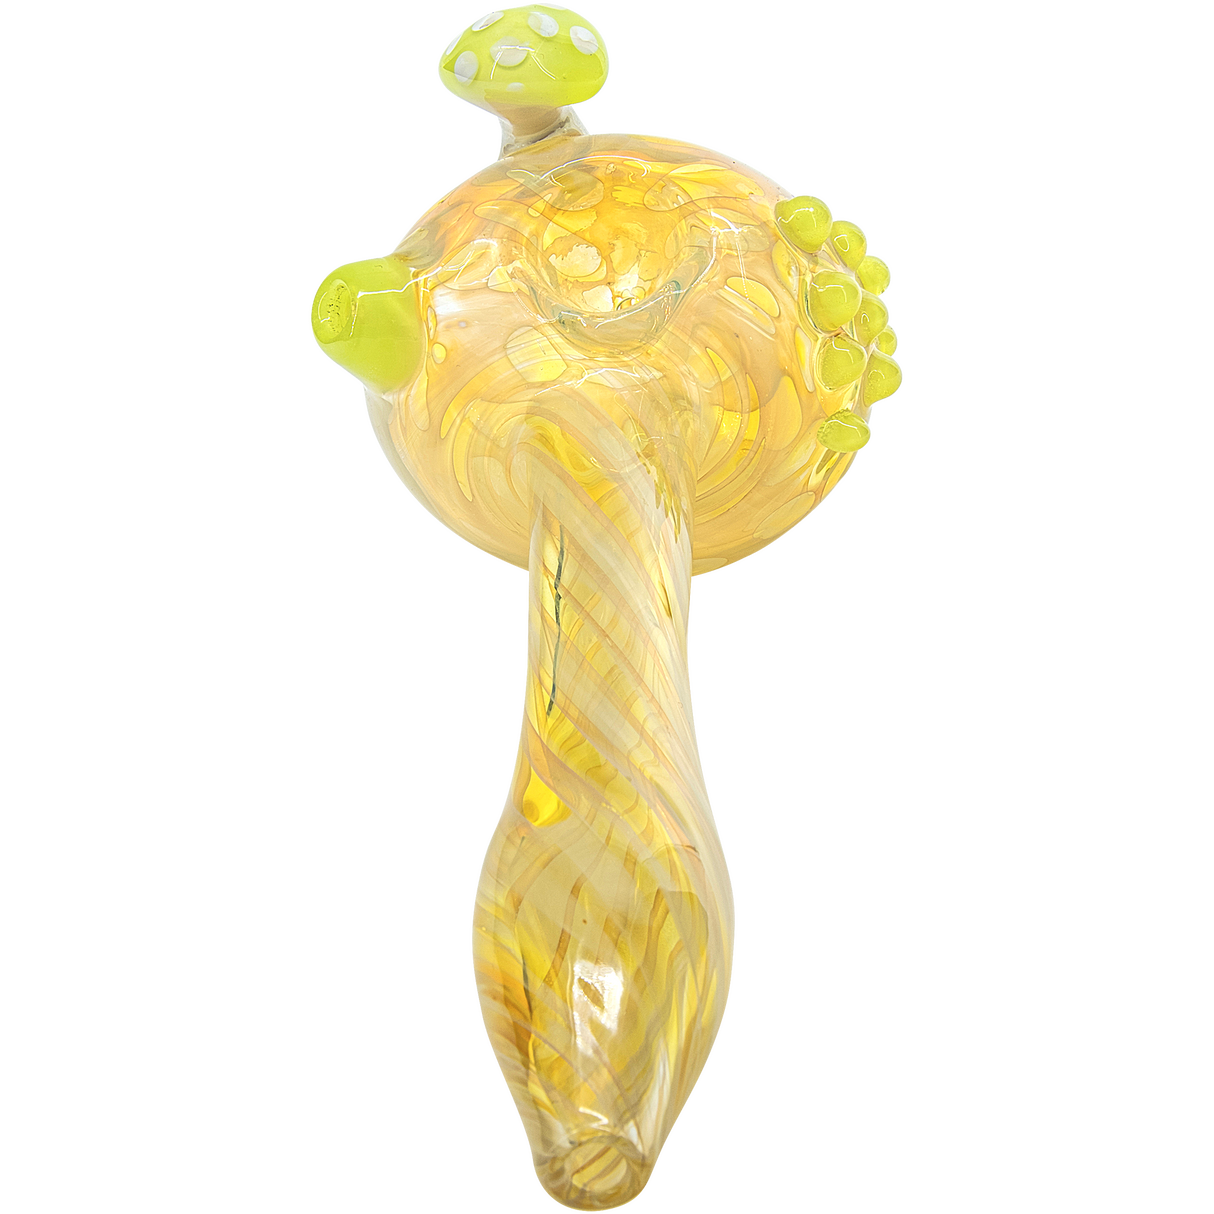 LA Pipes "Shrooming" Mushroom Head Color-Changing Spoon